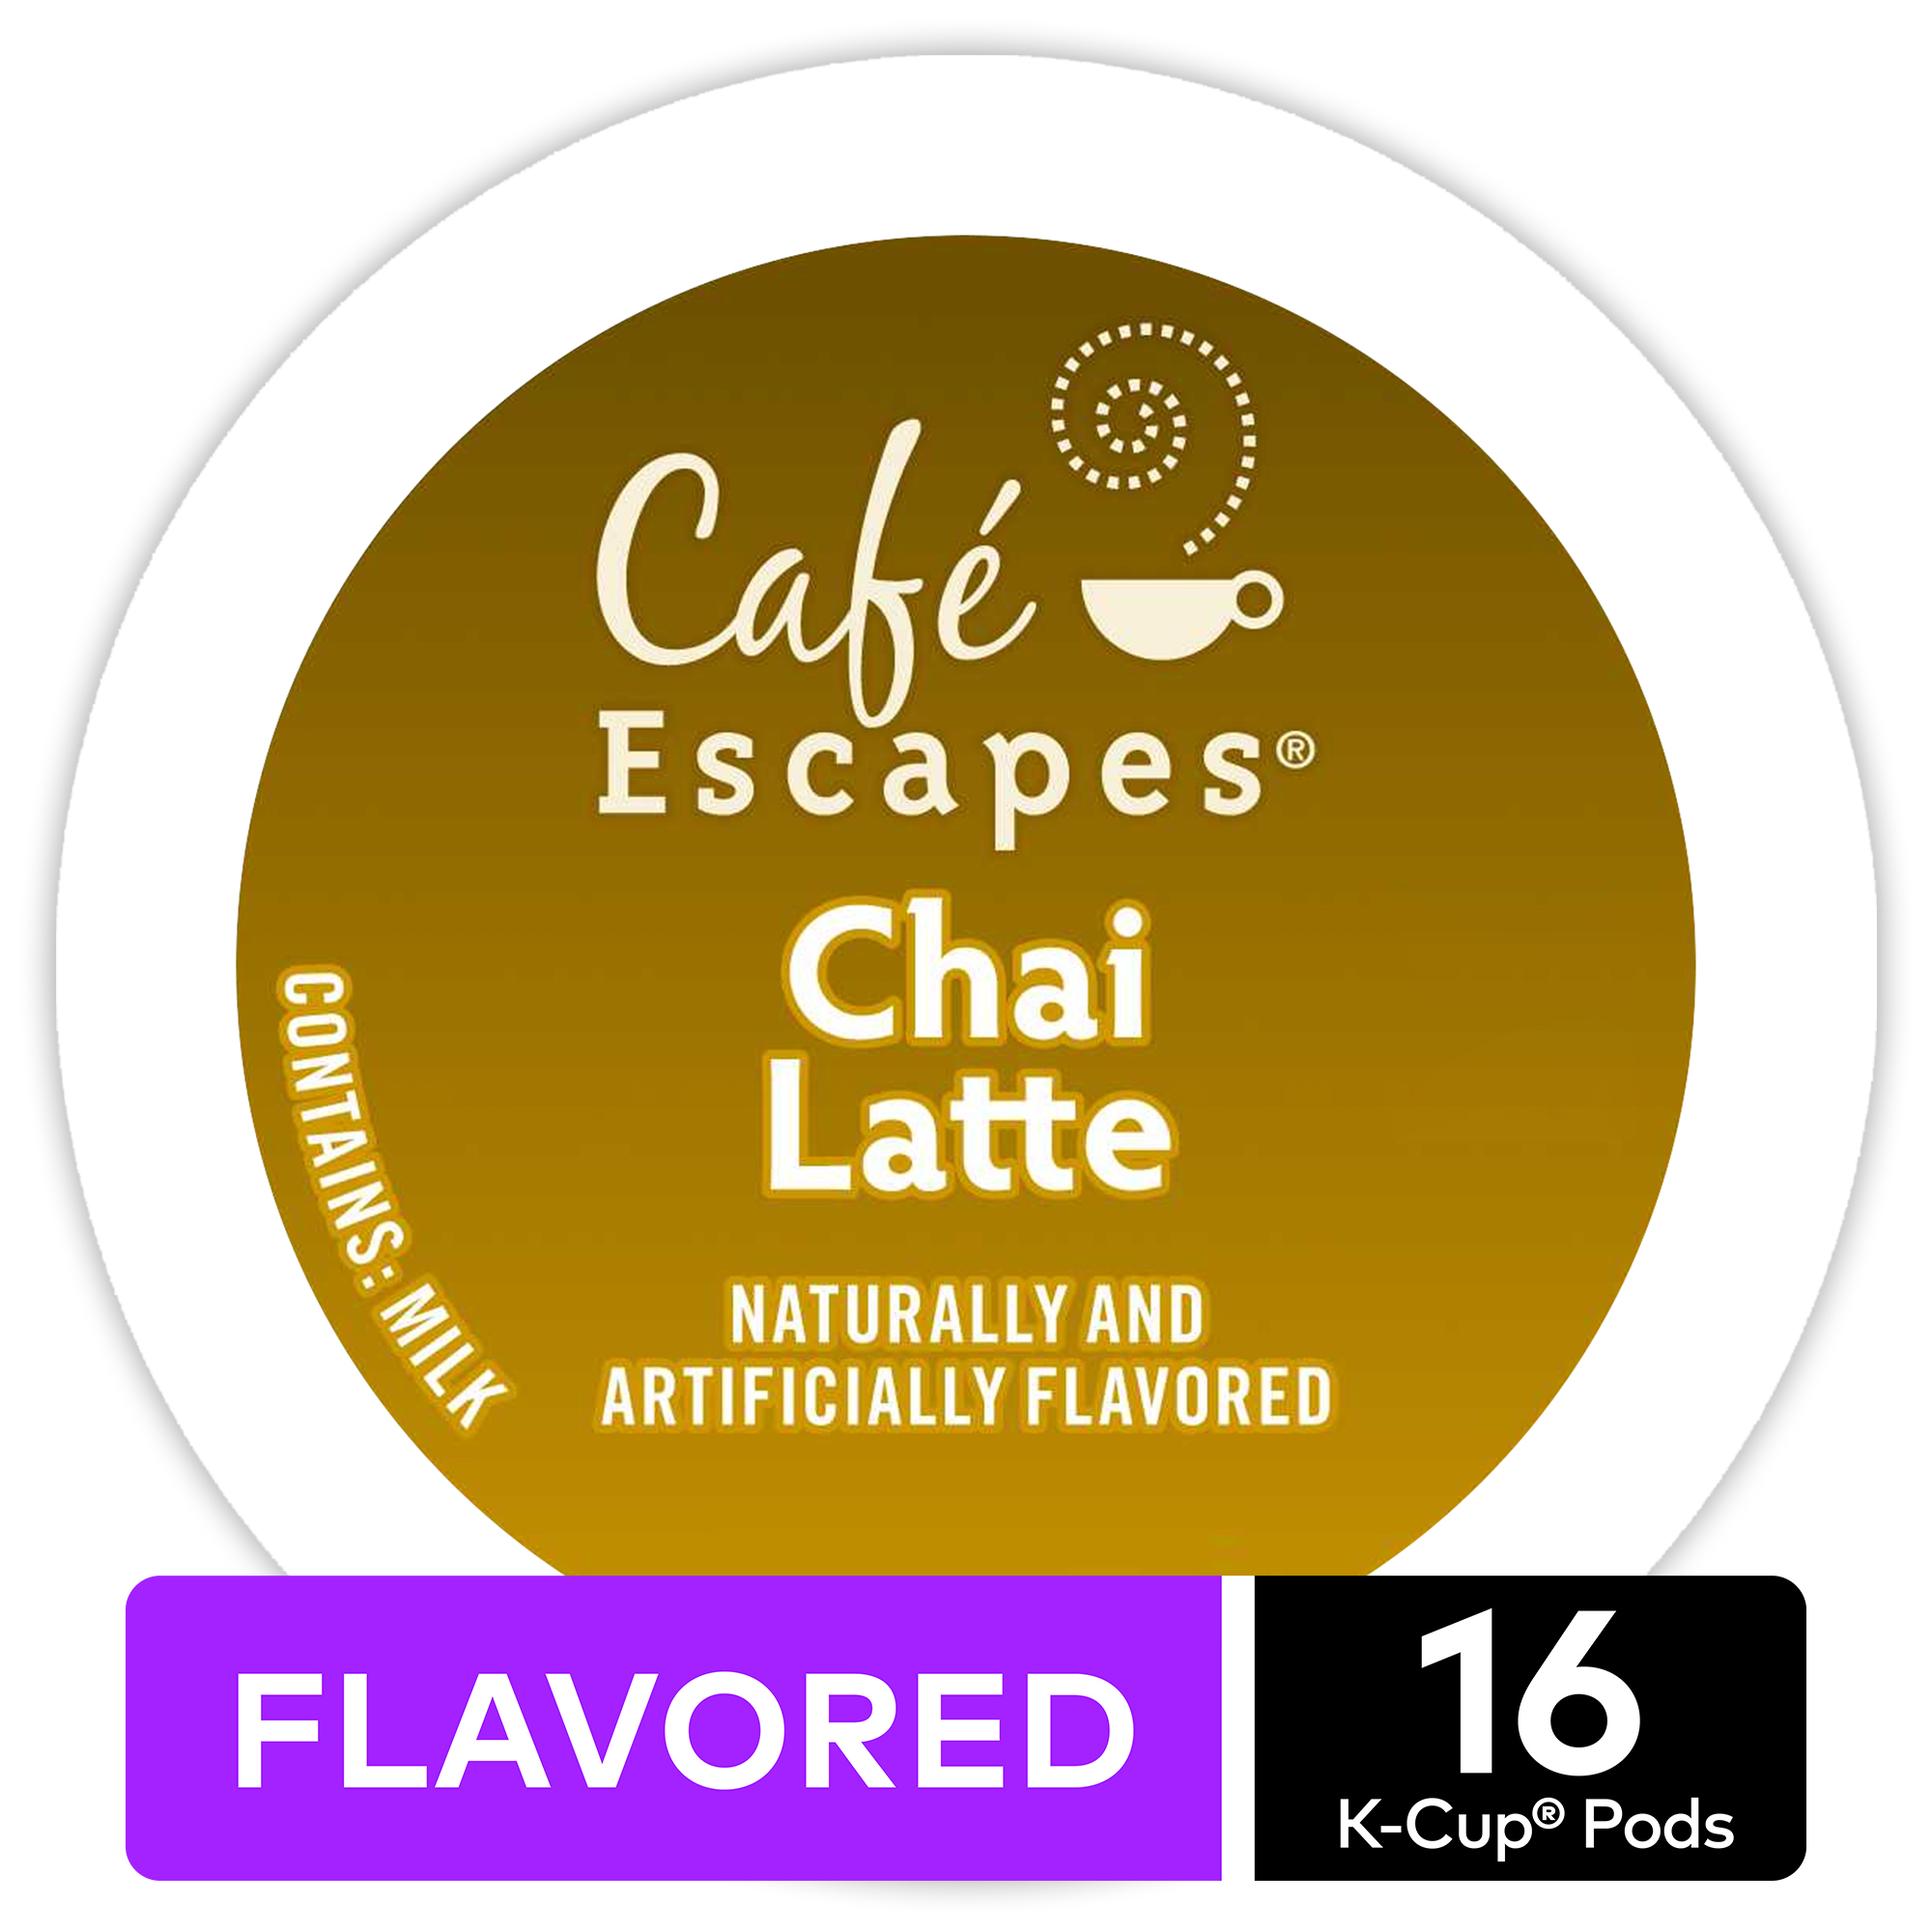 Cafe Escapes Chai Latte, Keurig K-Cup Pods, Contains Milk, 16ct - image 2 of 6